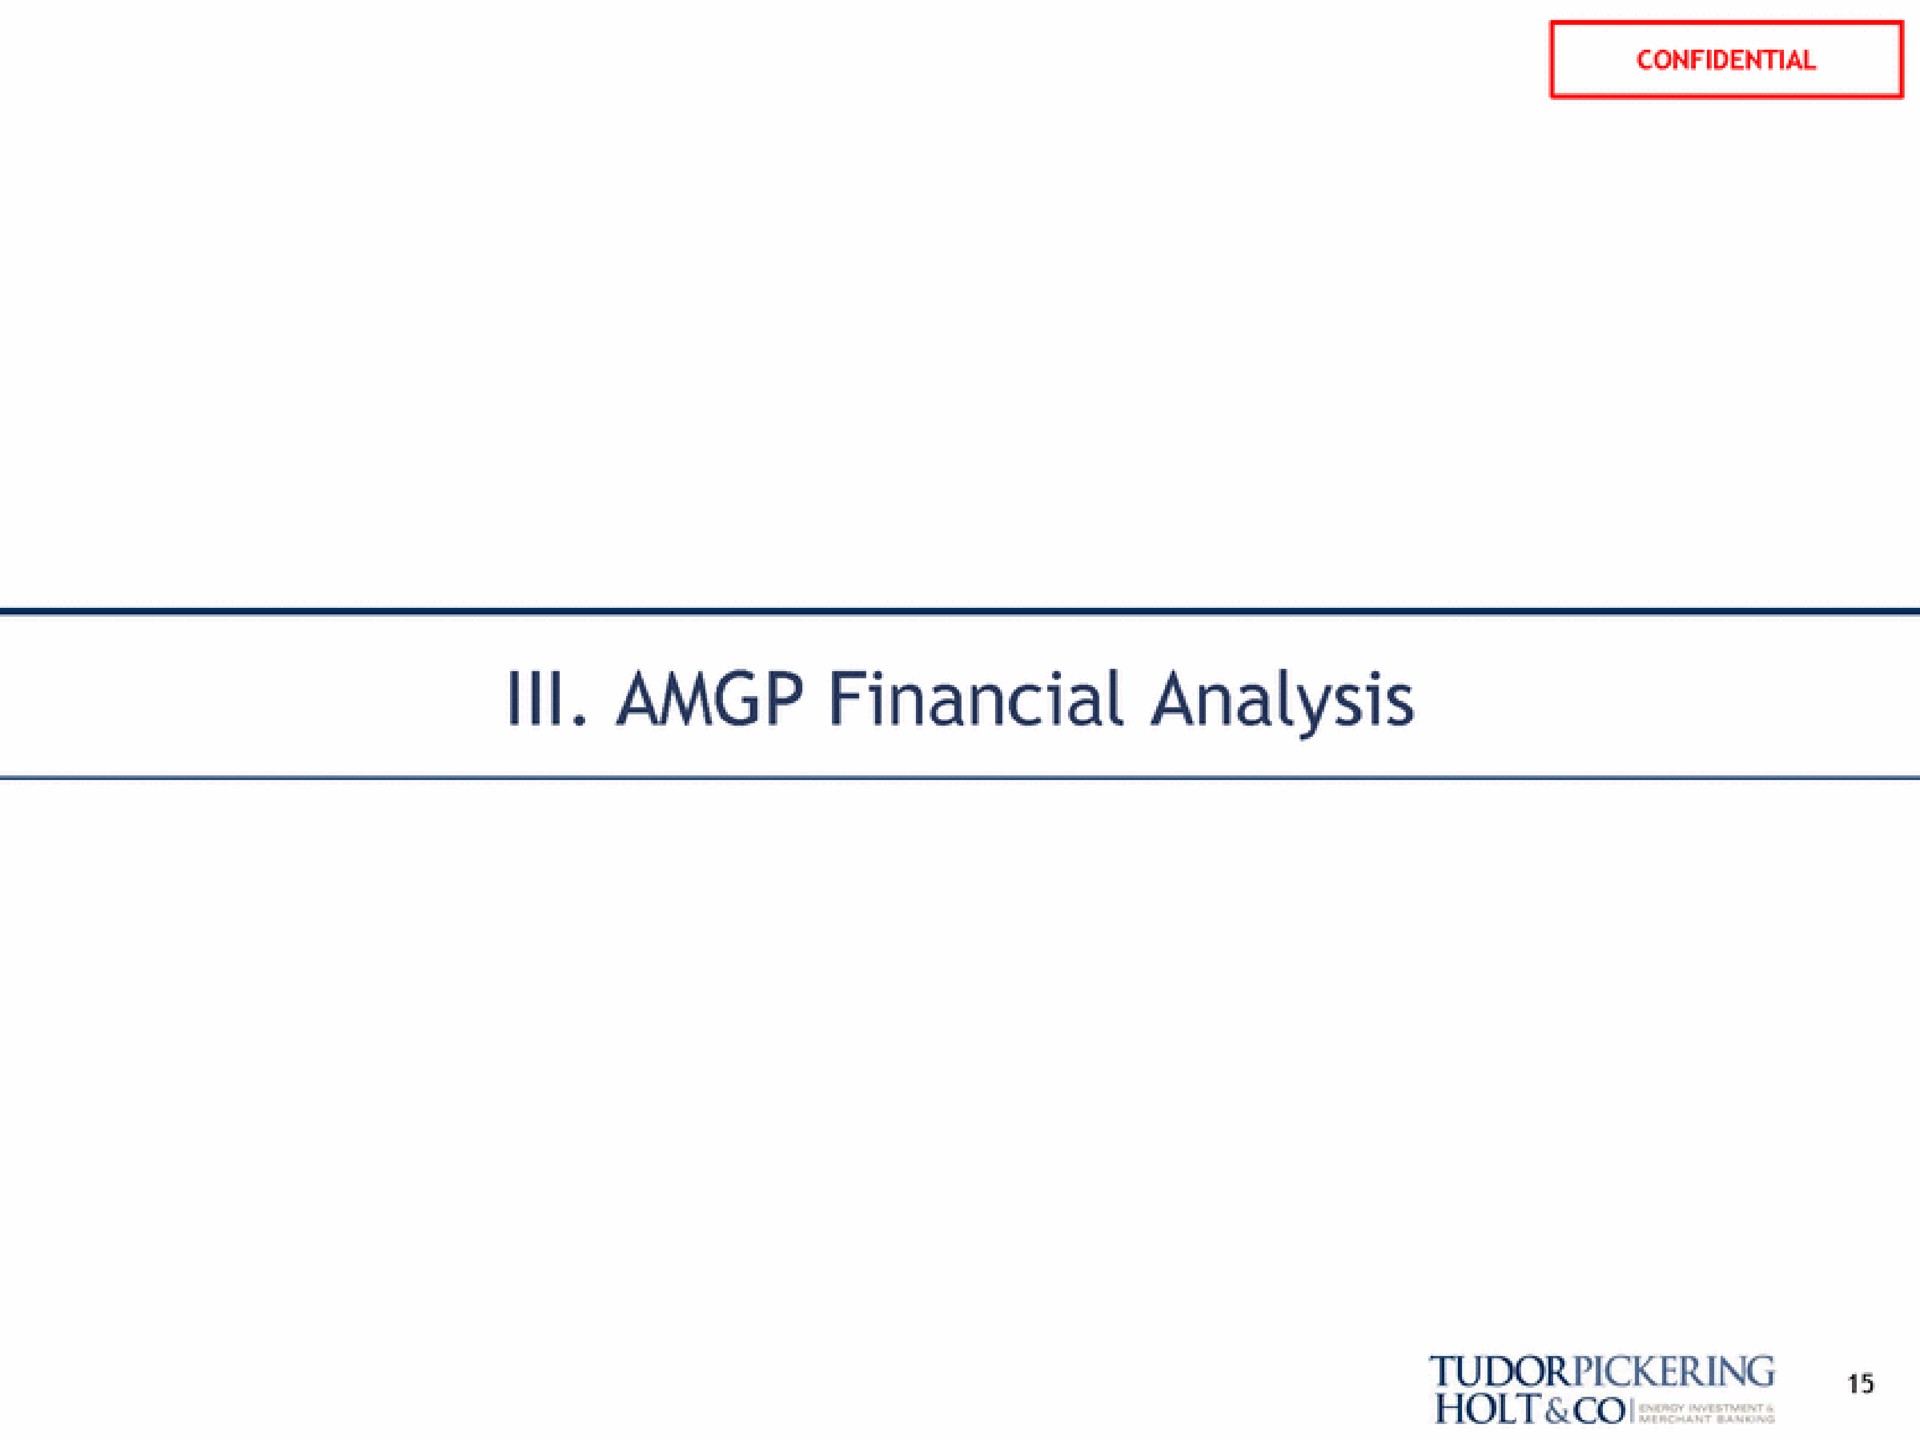 financial analysis | Tudor, Pickering, Holt & Co